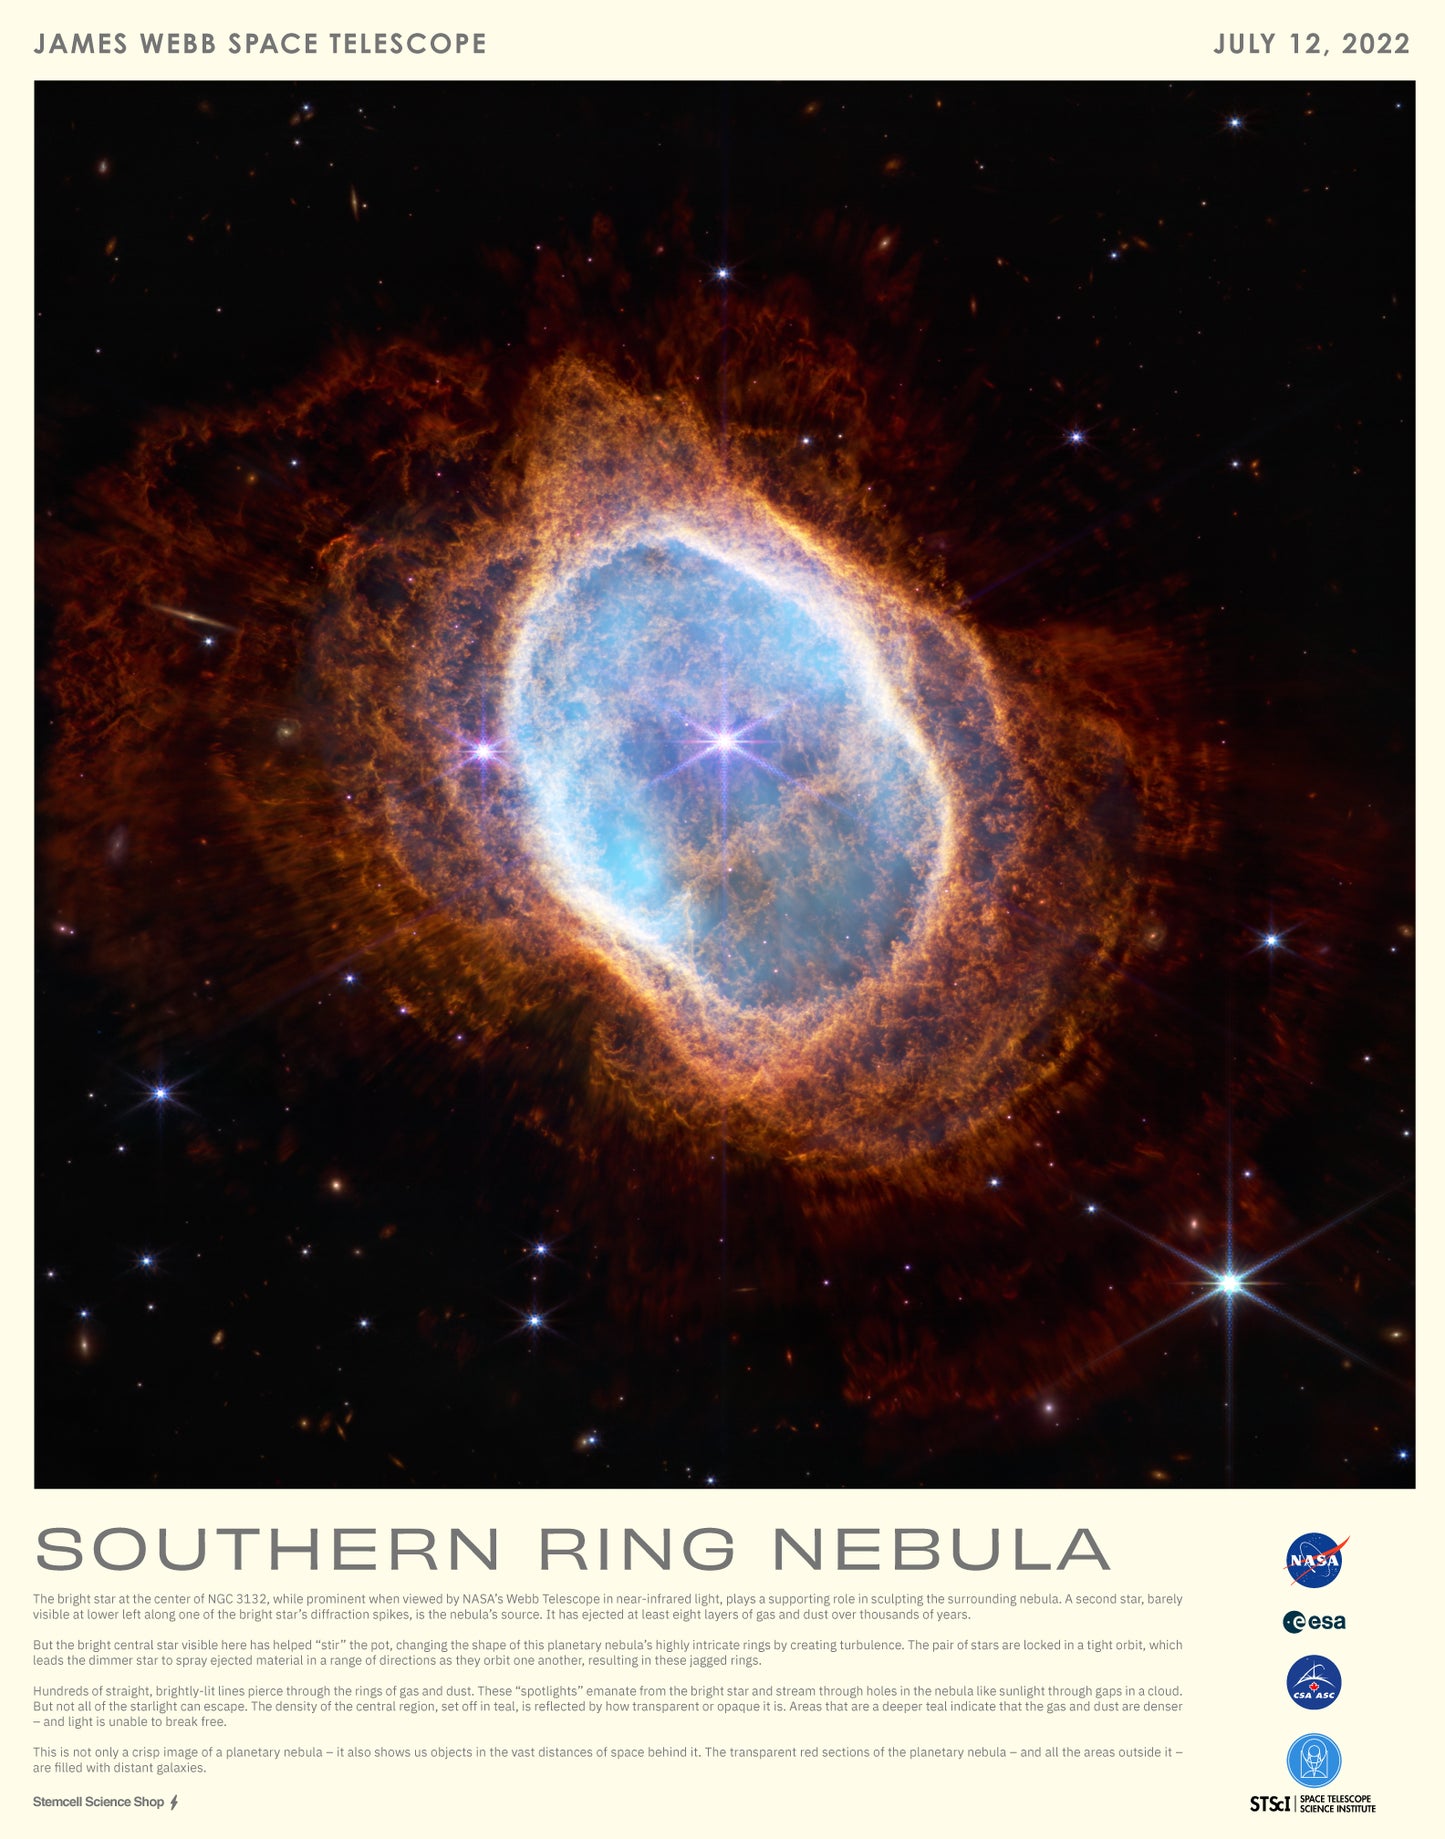 JWST Historic Poster #2 - Southern Ring Nebula - Stemcell Science Shop